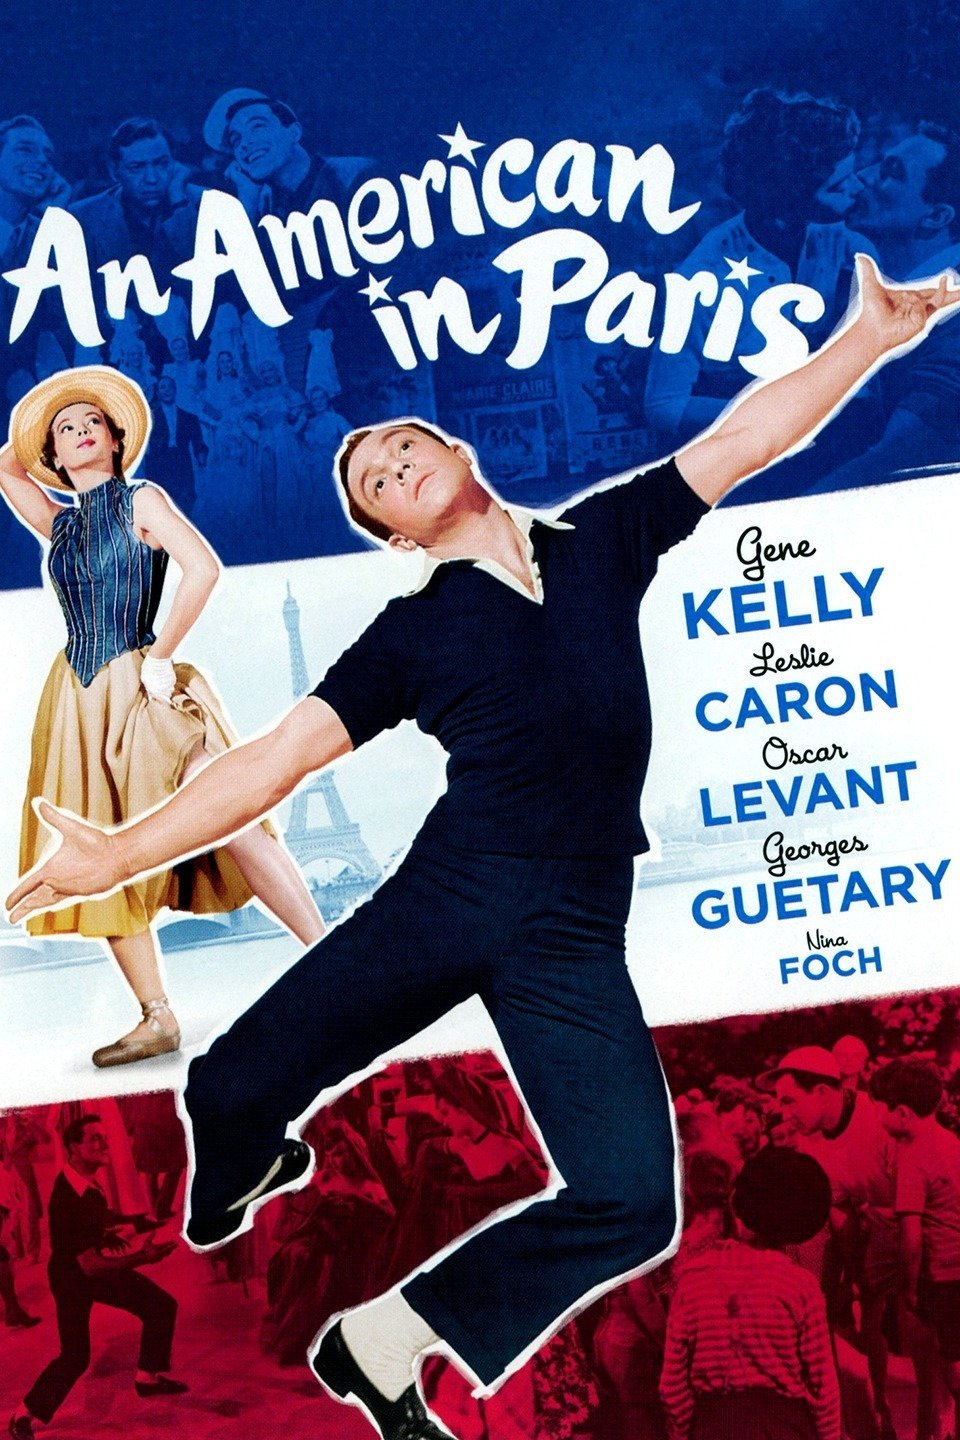 Is an American in Paris a ballet?